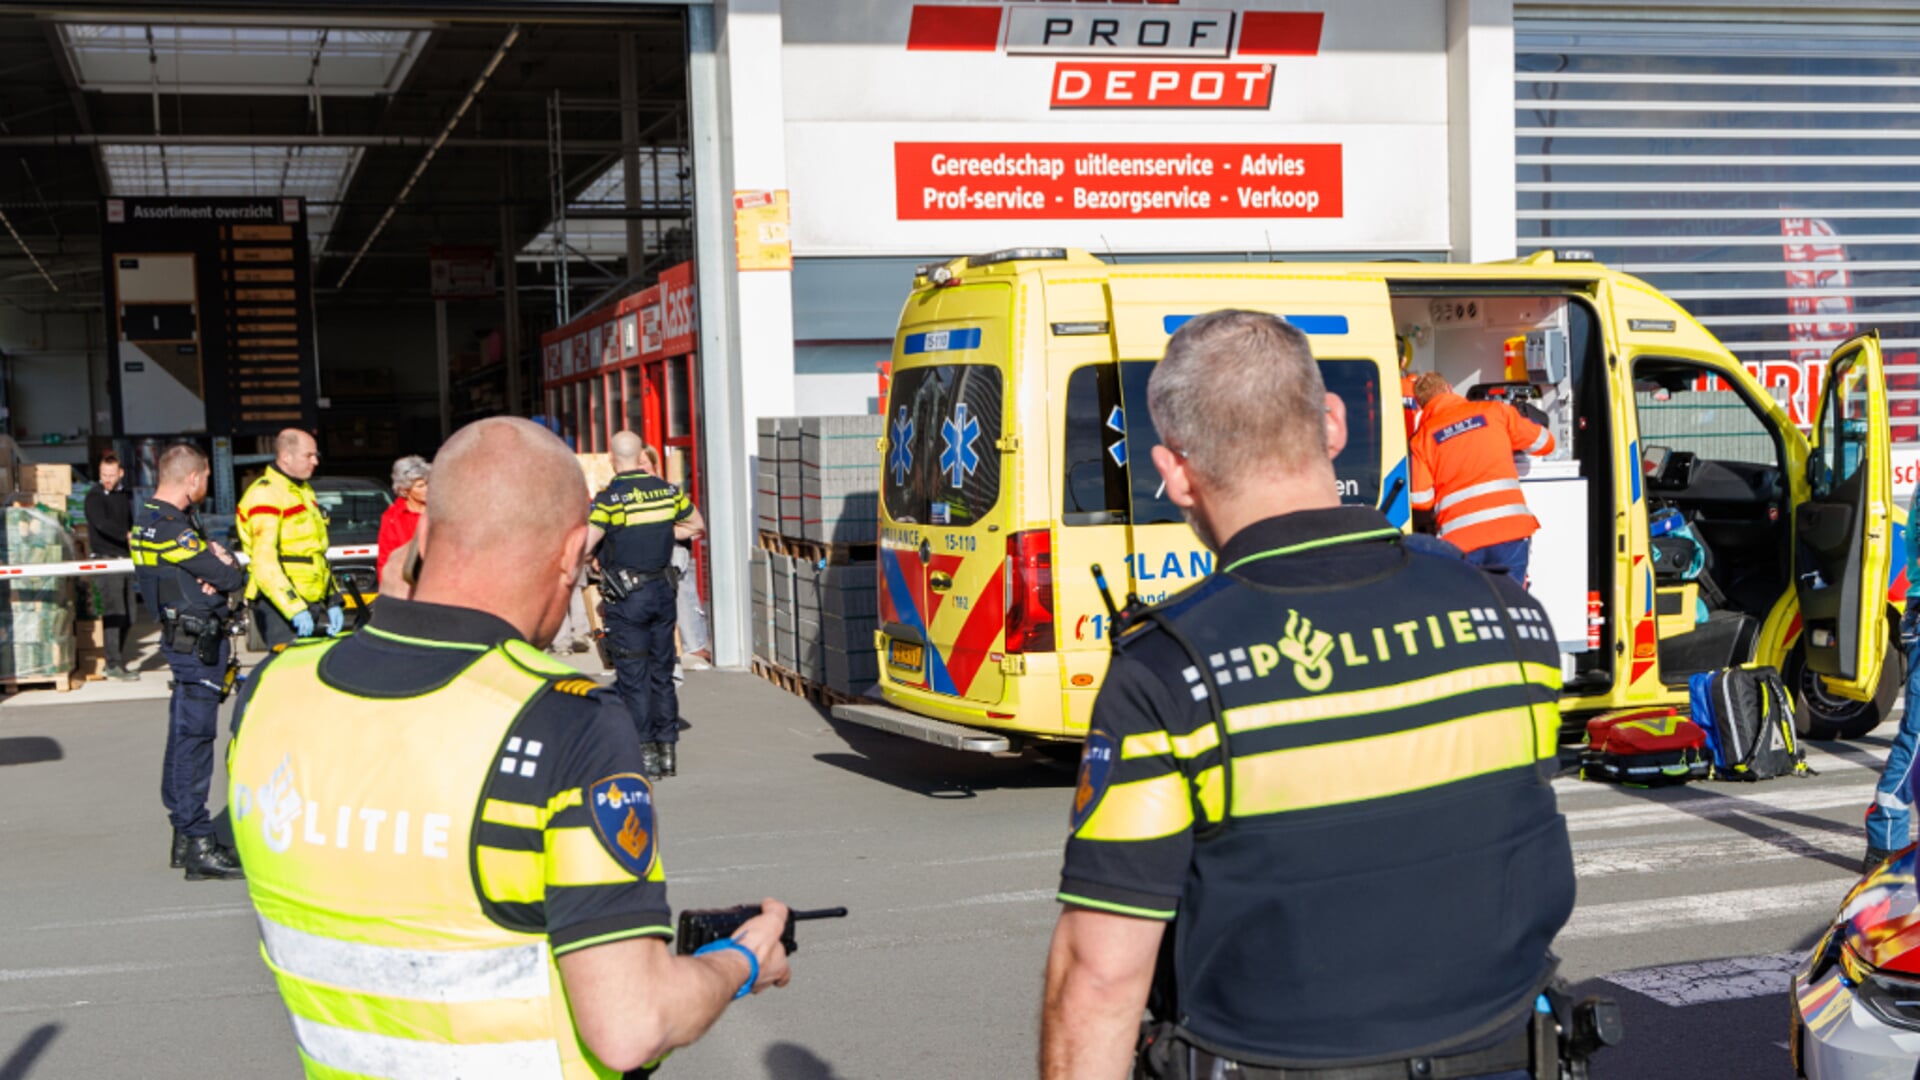 Persoon zwaar gewond na val in bouwmarkt Sionsdreef in Den Hoorn